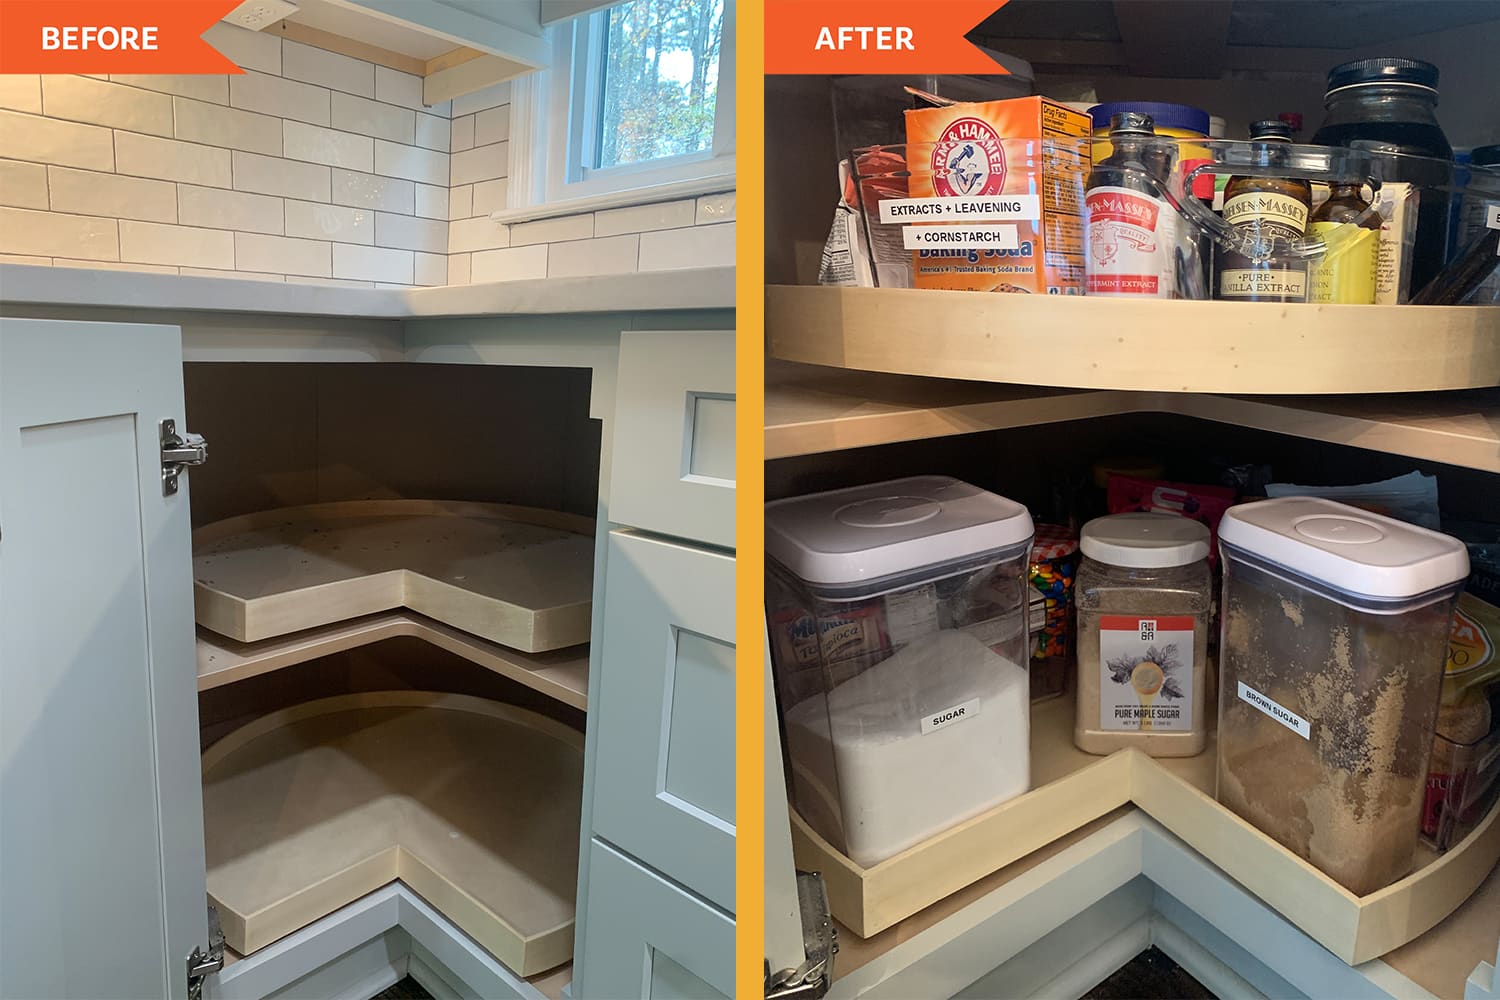 This $12 Wedge Organizer Is the Storage Solution for My Kitchen’s Awkward Corner Cabinet